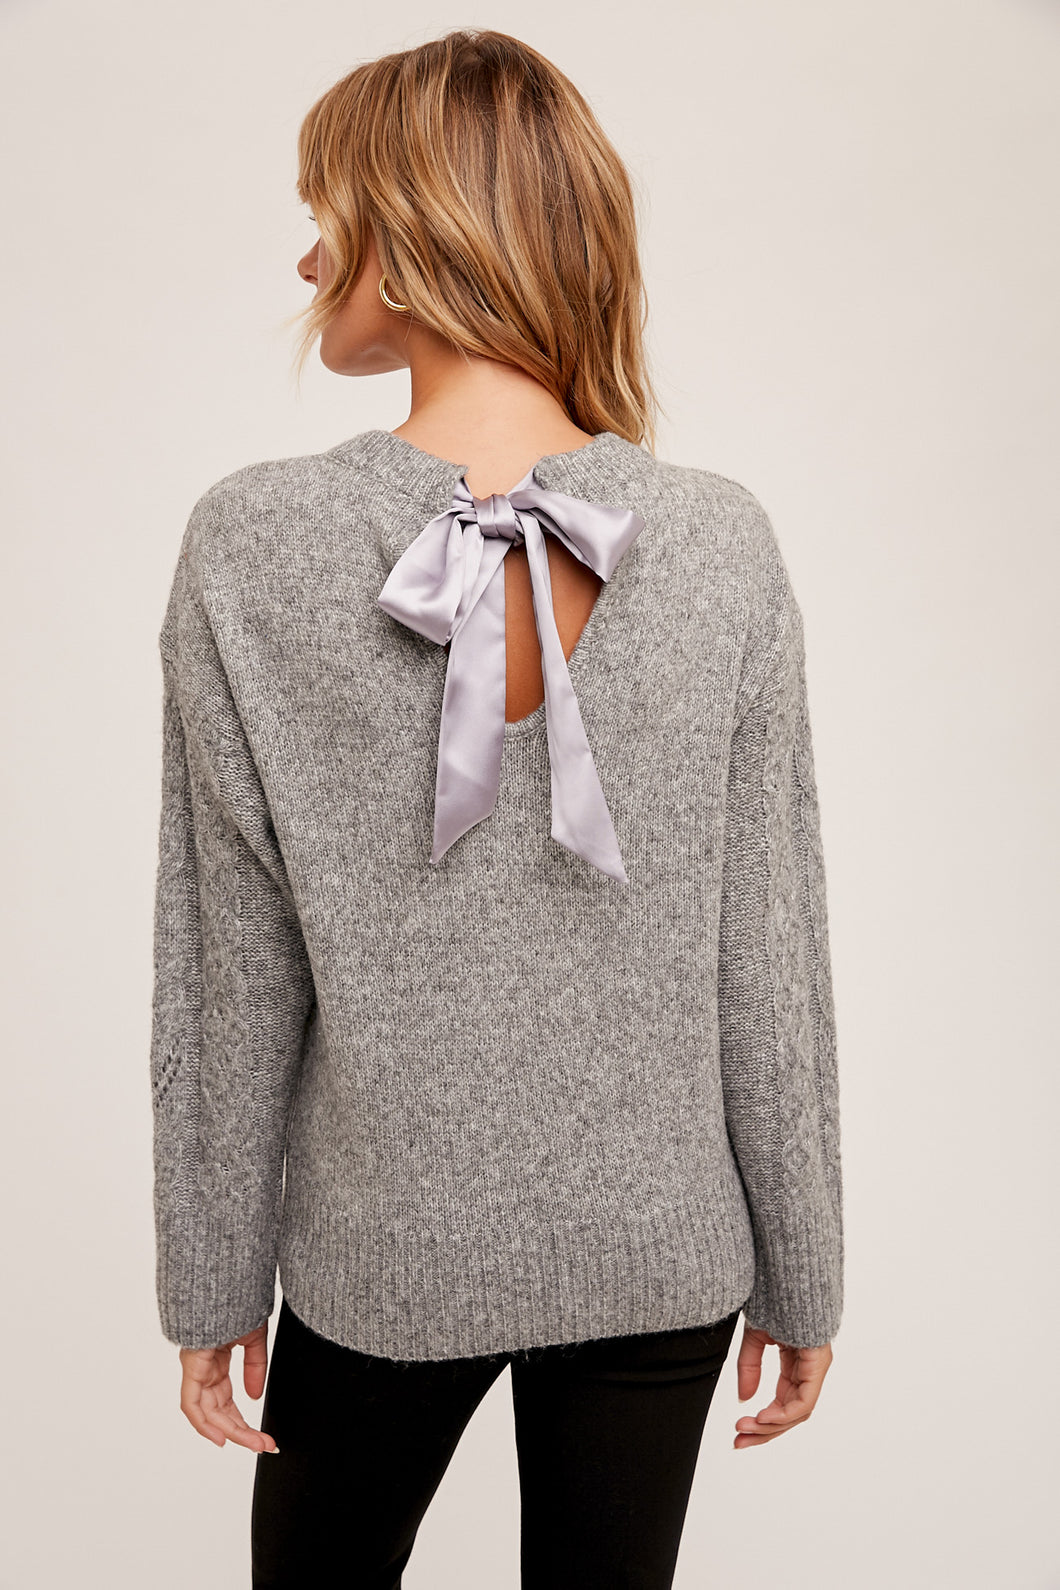 The Helena Back Satin Tie Sweater